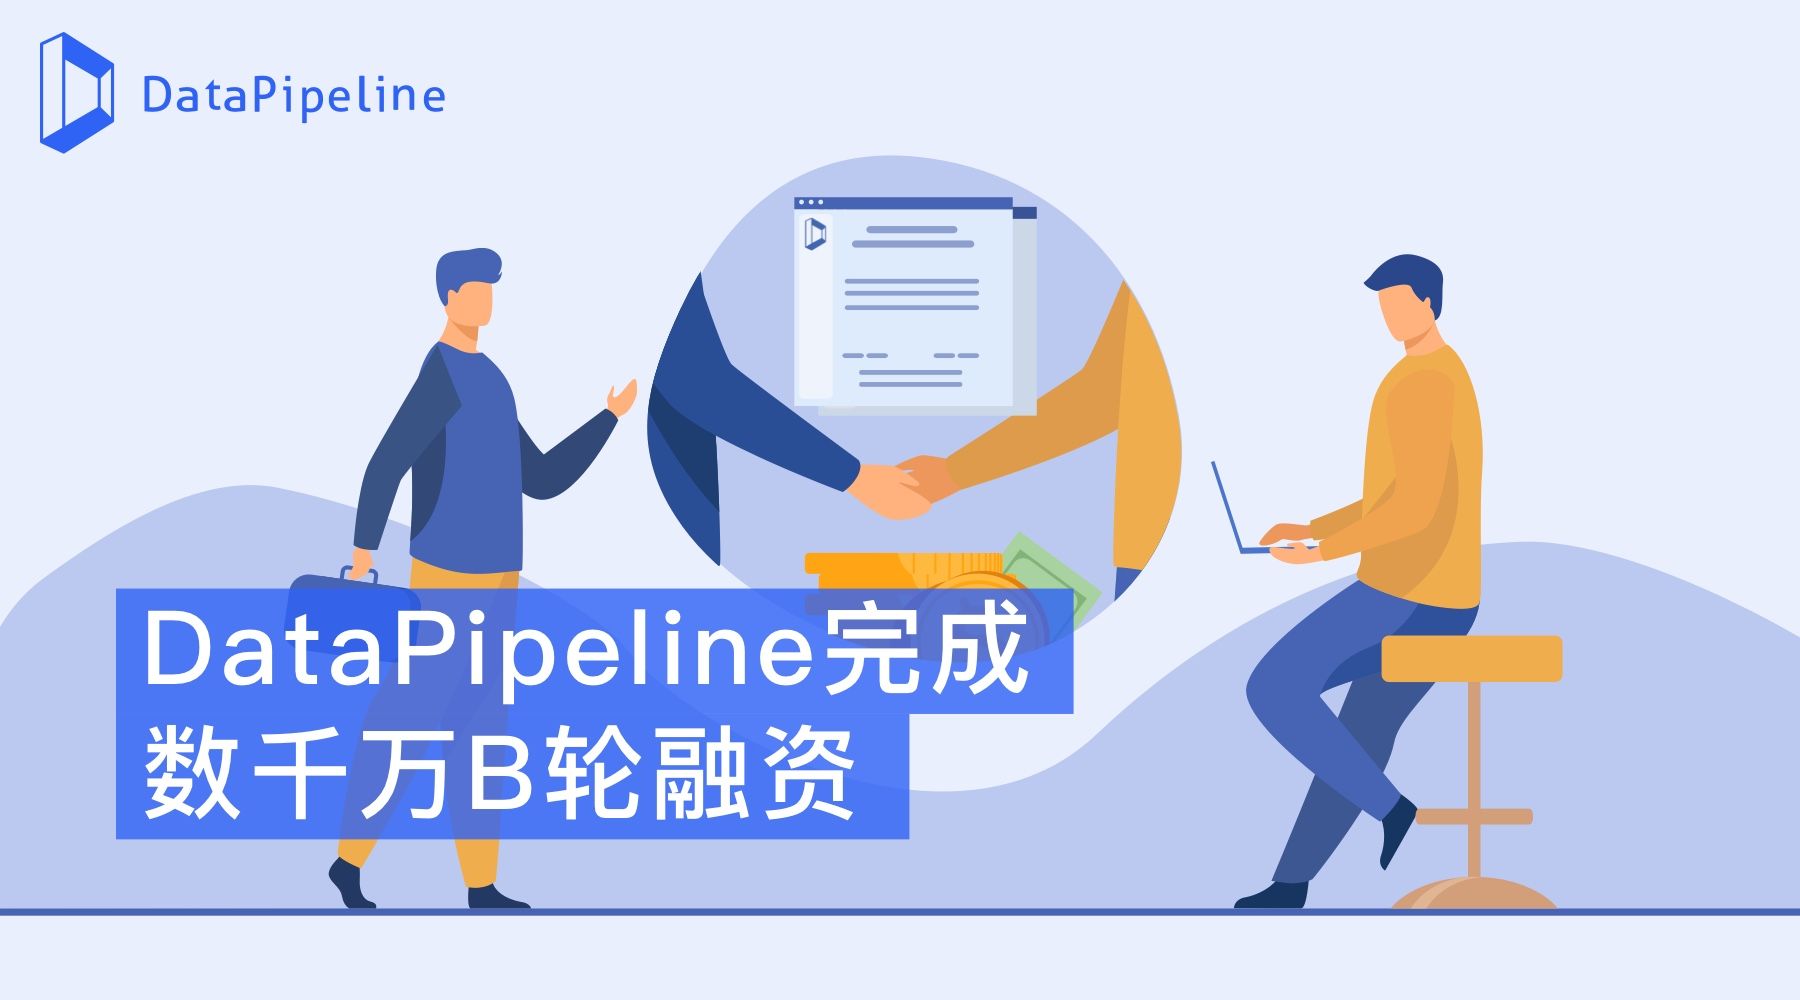 「DataPipeline」完成数千万B轮融资，加速构建中国的世界级数据中间件产品